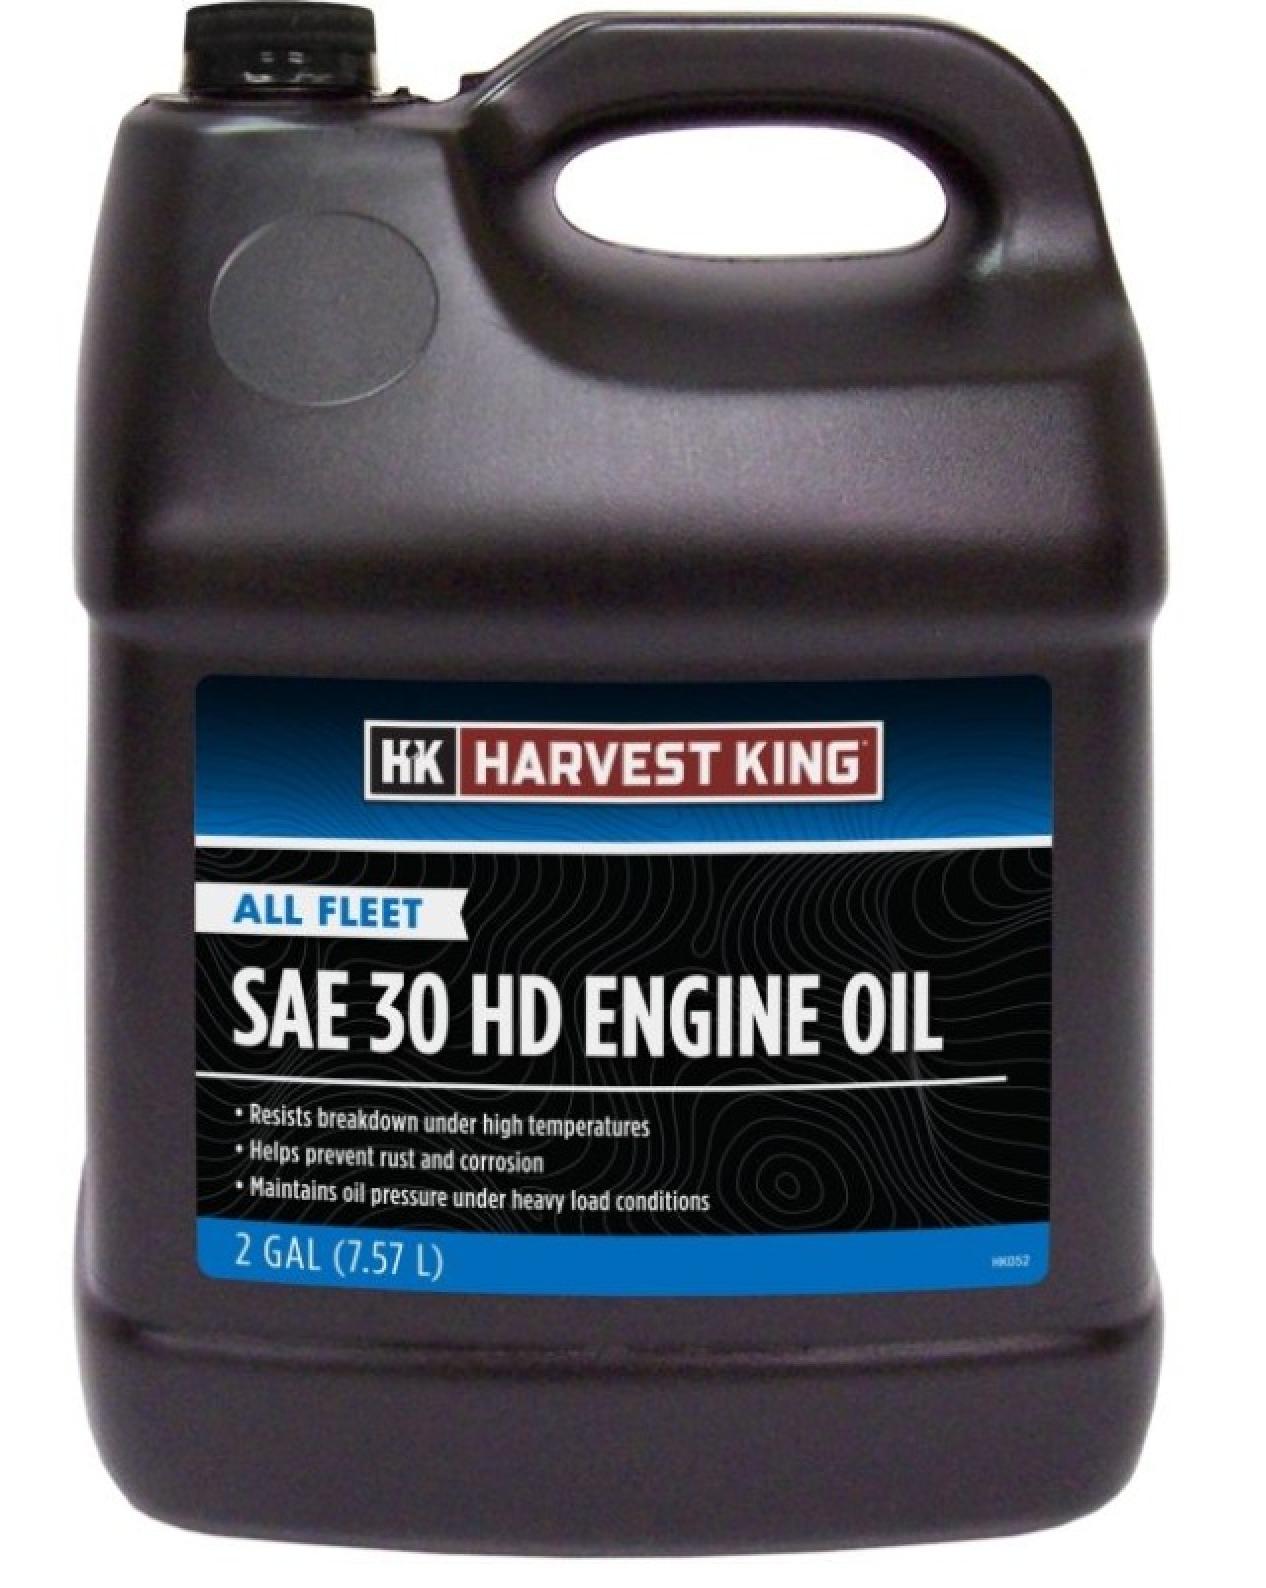 Harvest King All Fleet SAE 30 HD Diesel Engine Oil